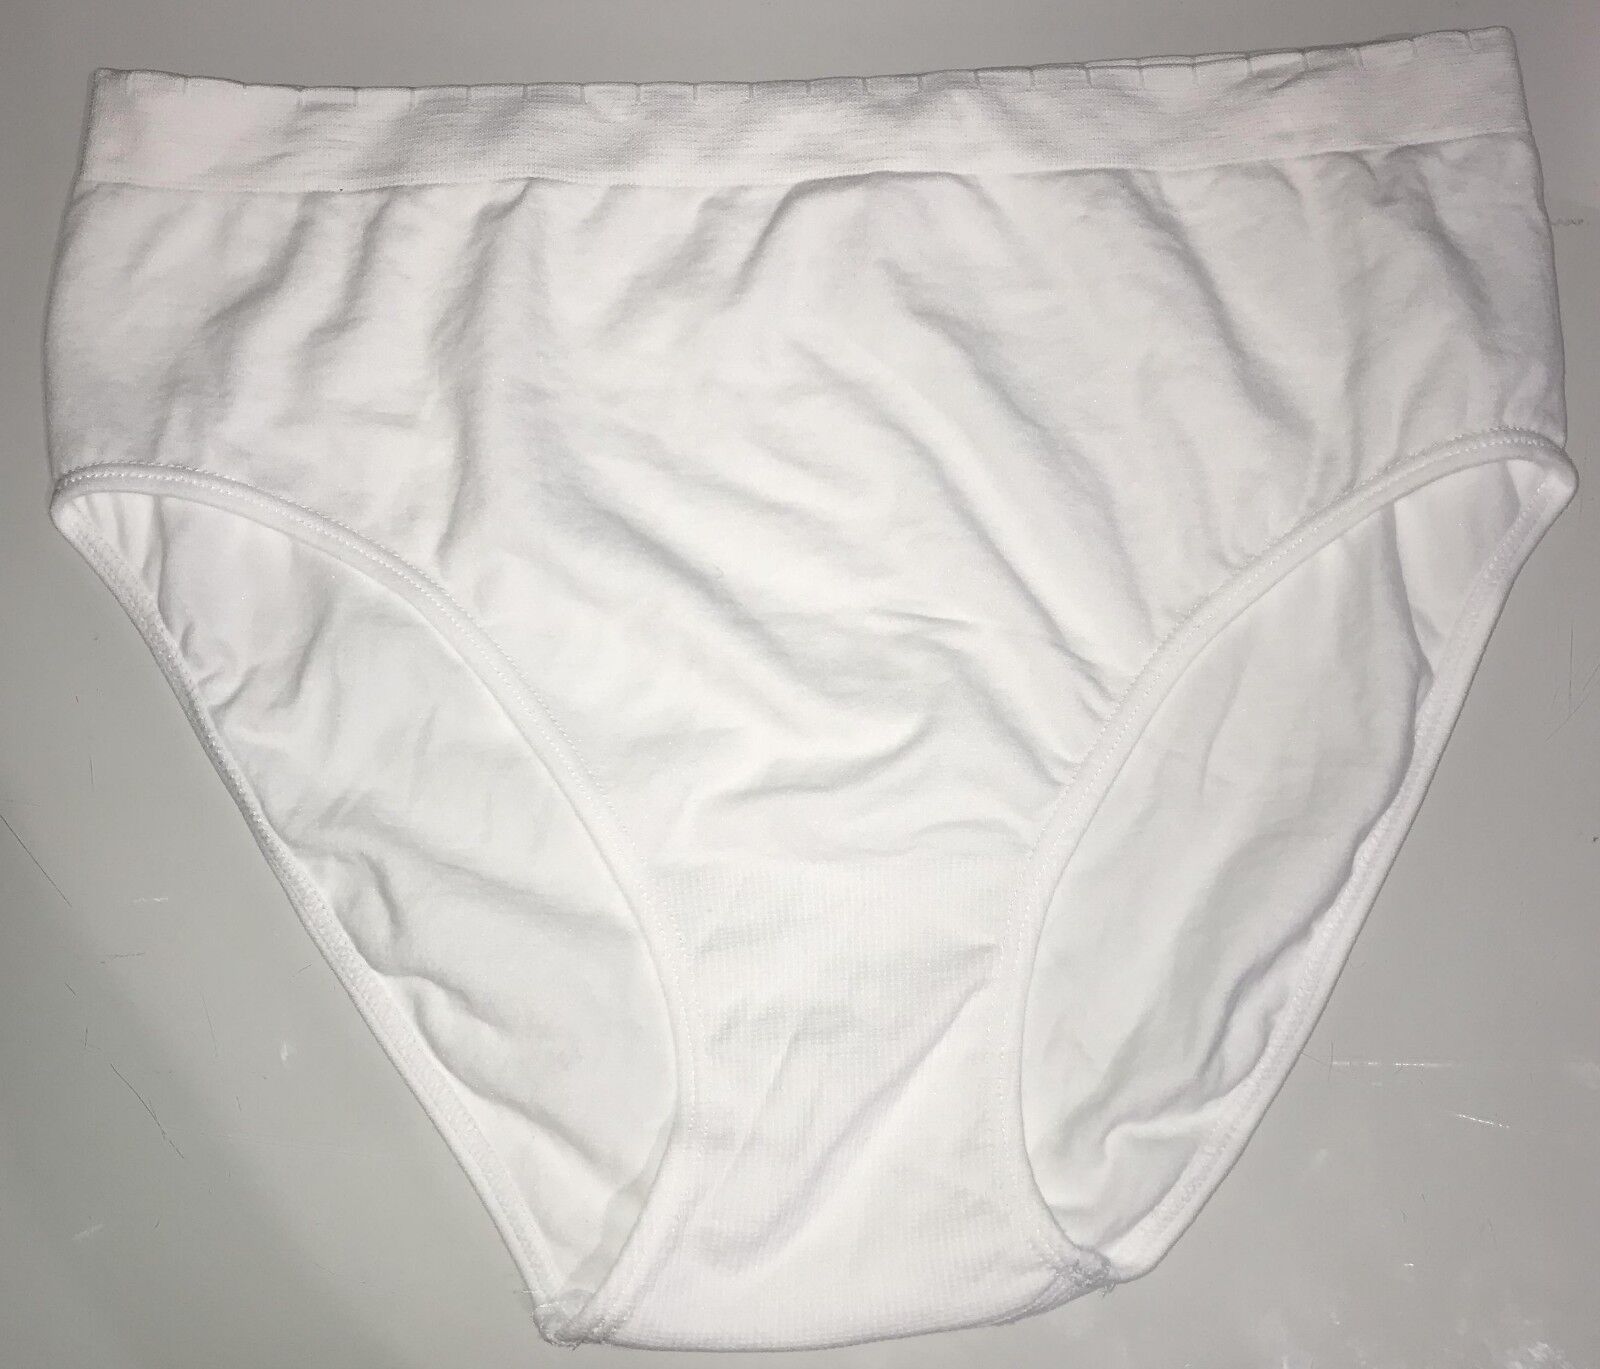 Best of White cotton panties fetish